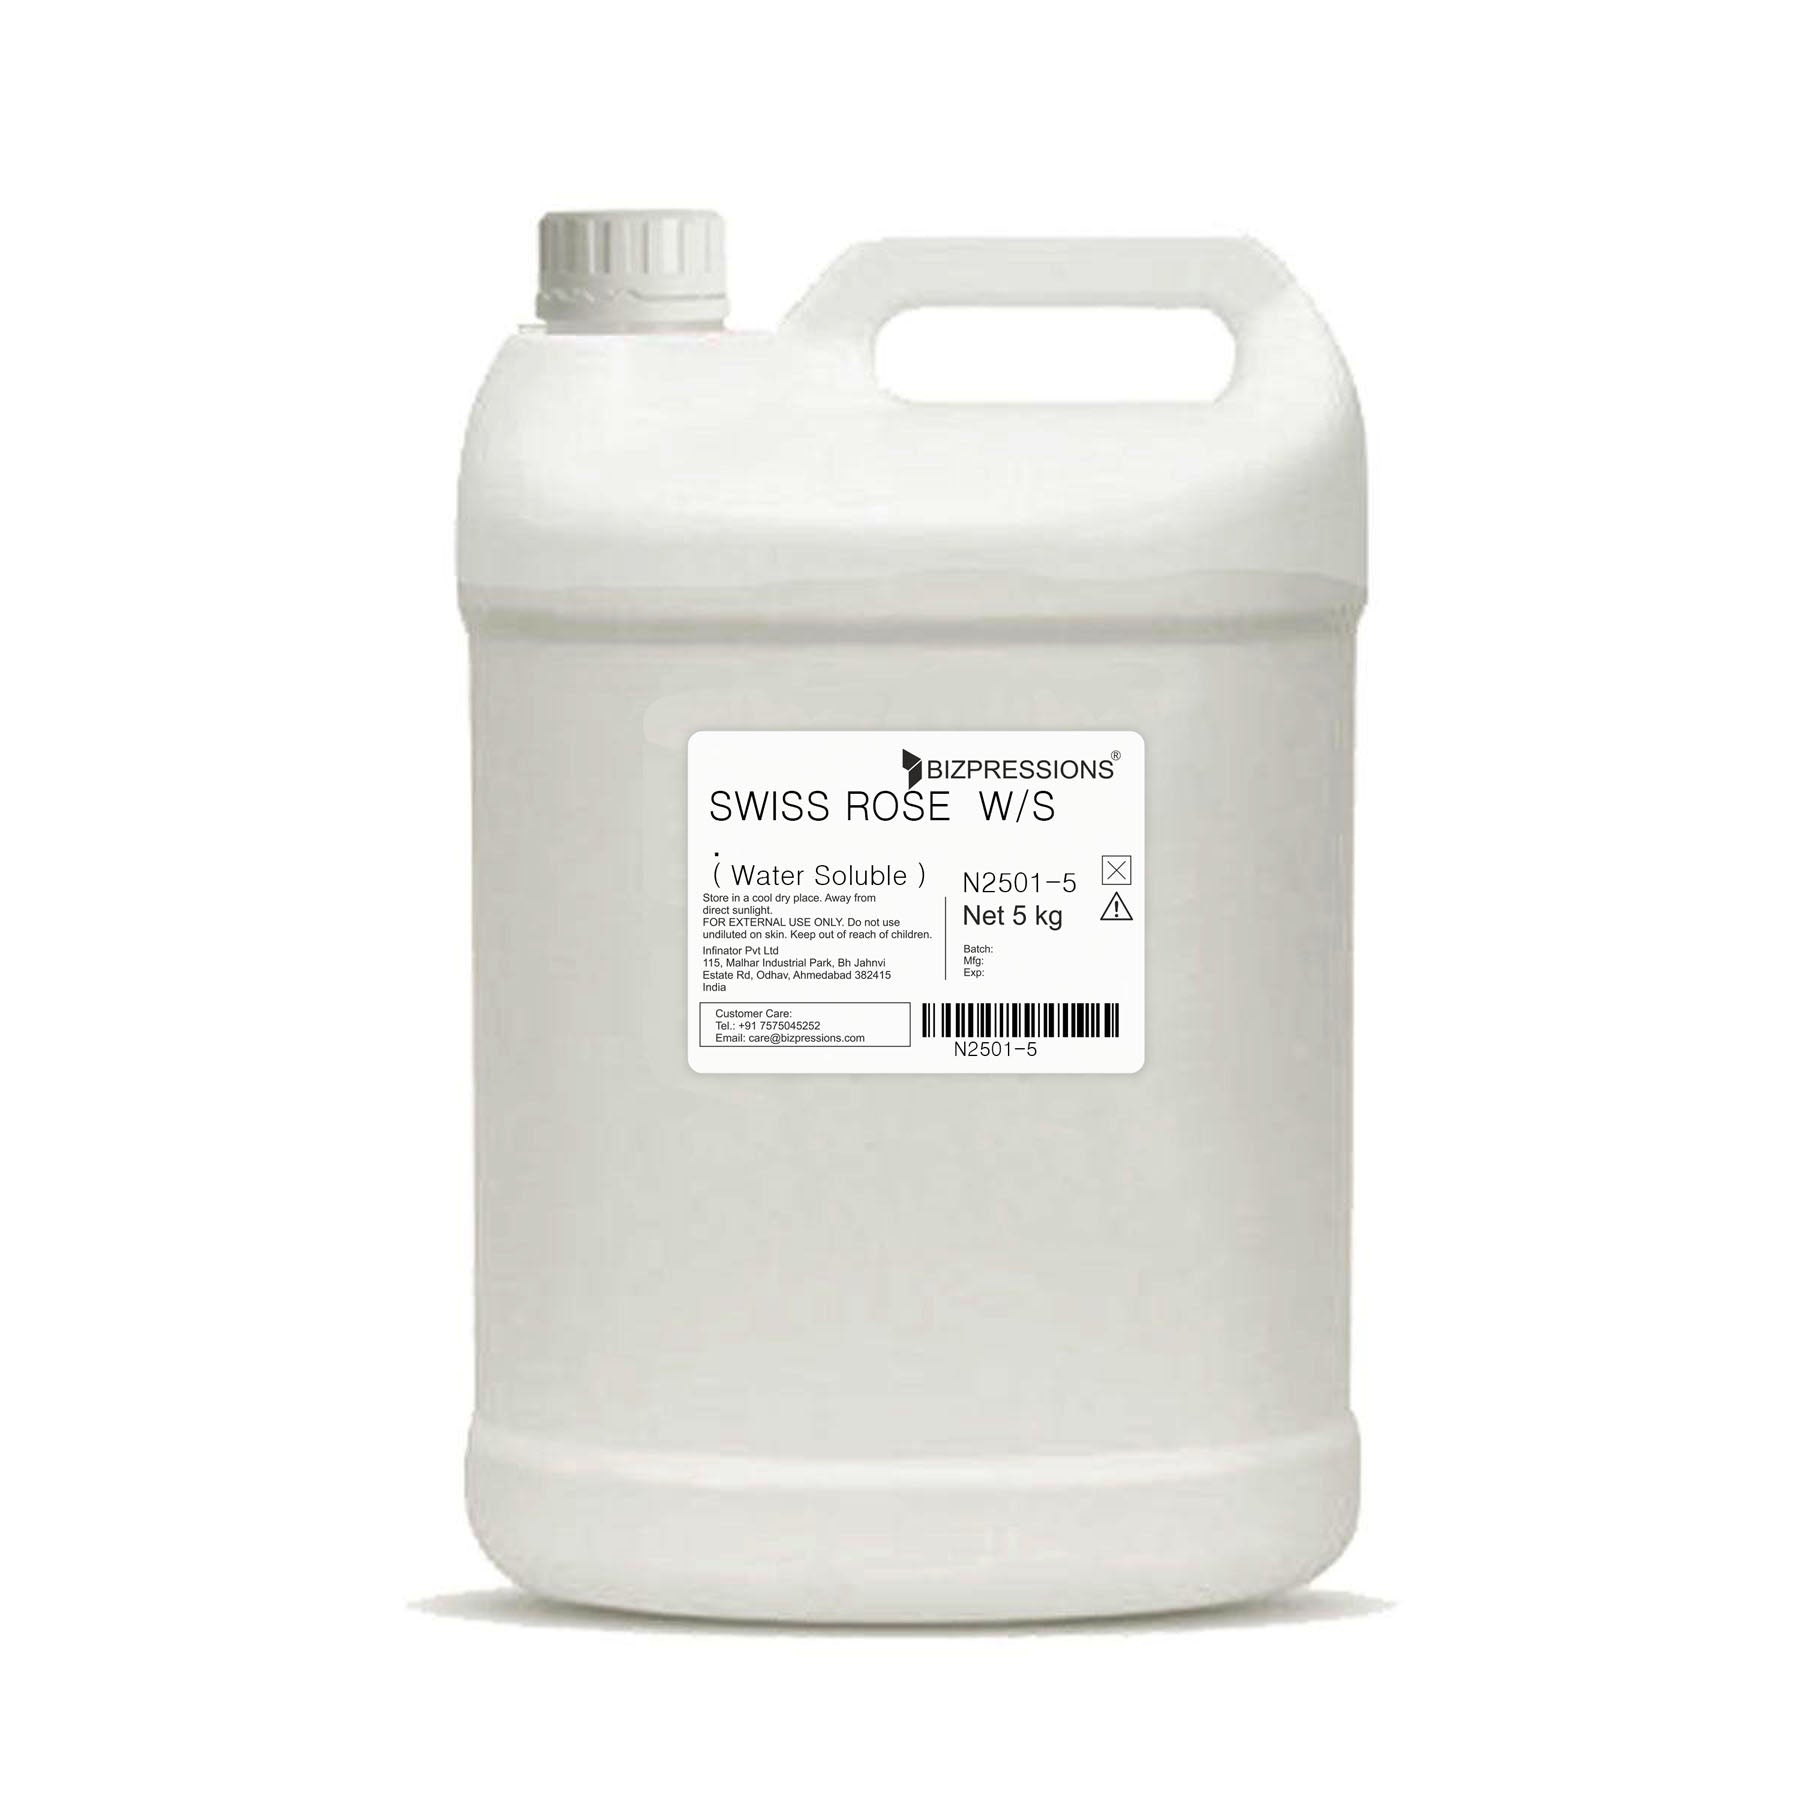 SWISS ROSE W/S - Fragrance ( Water Soluble ) - 5 kg